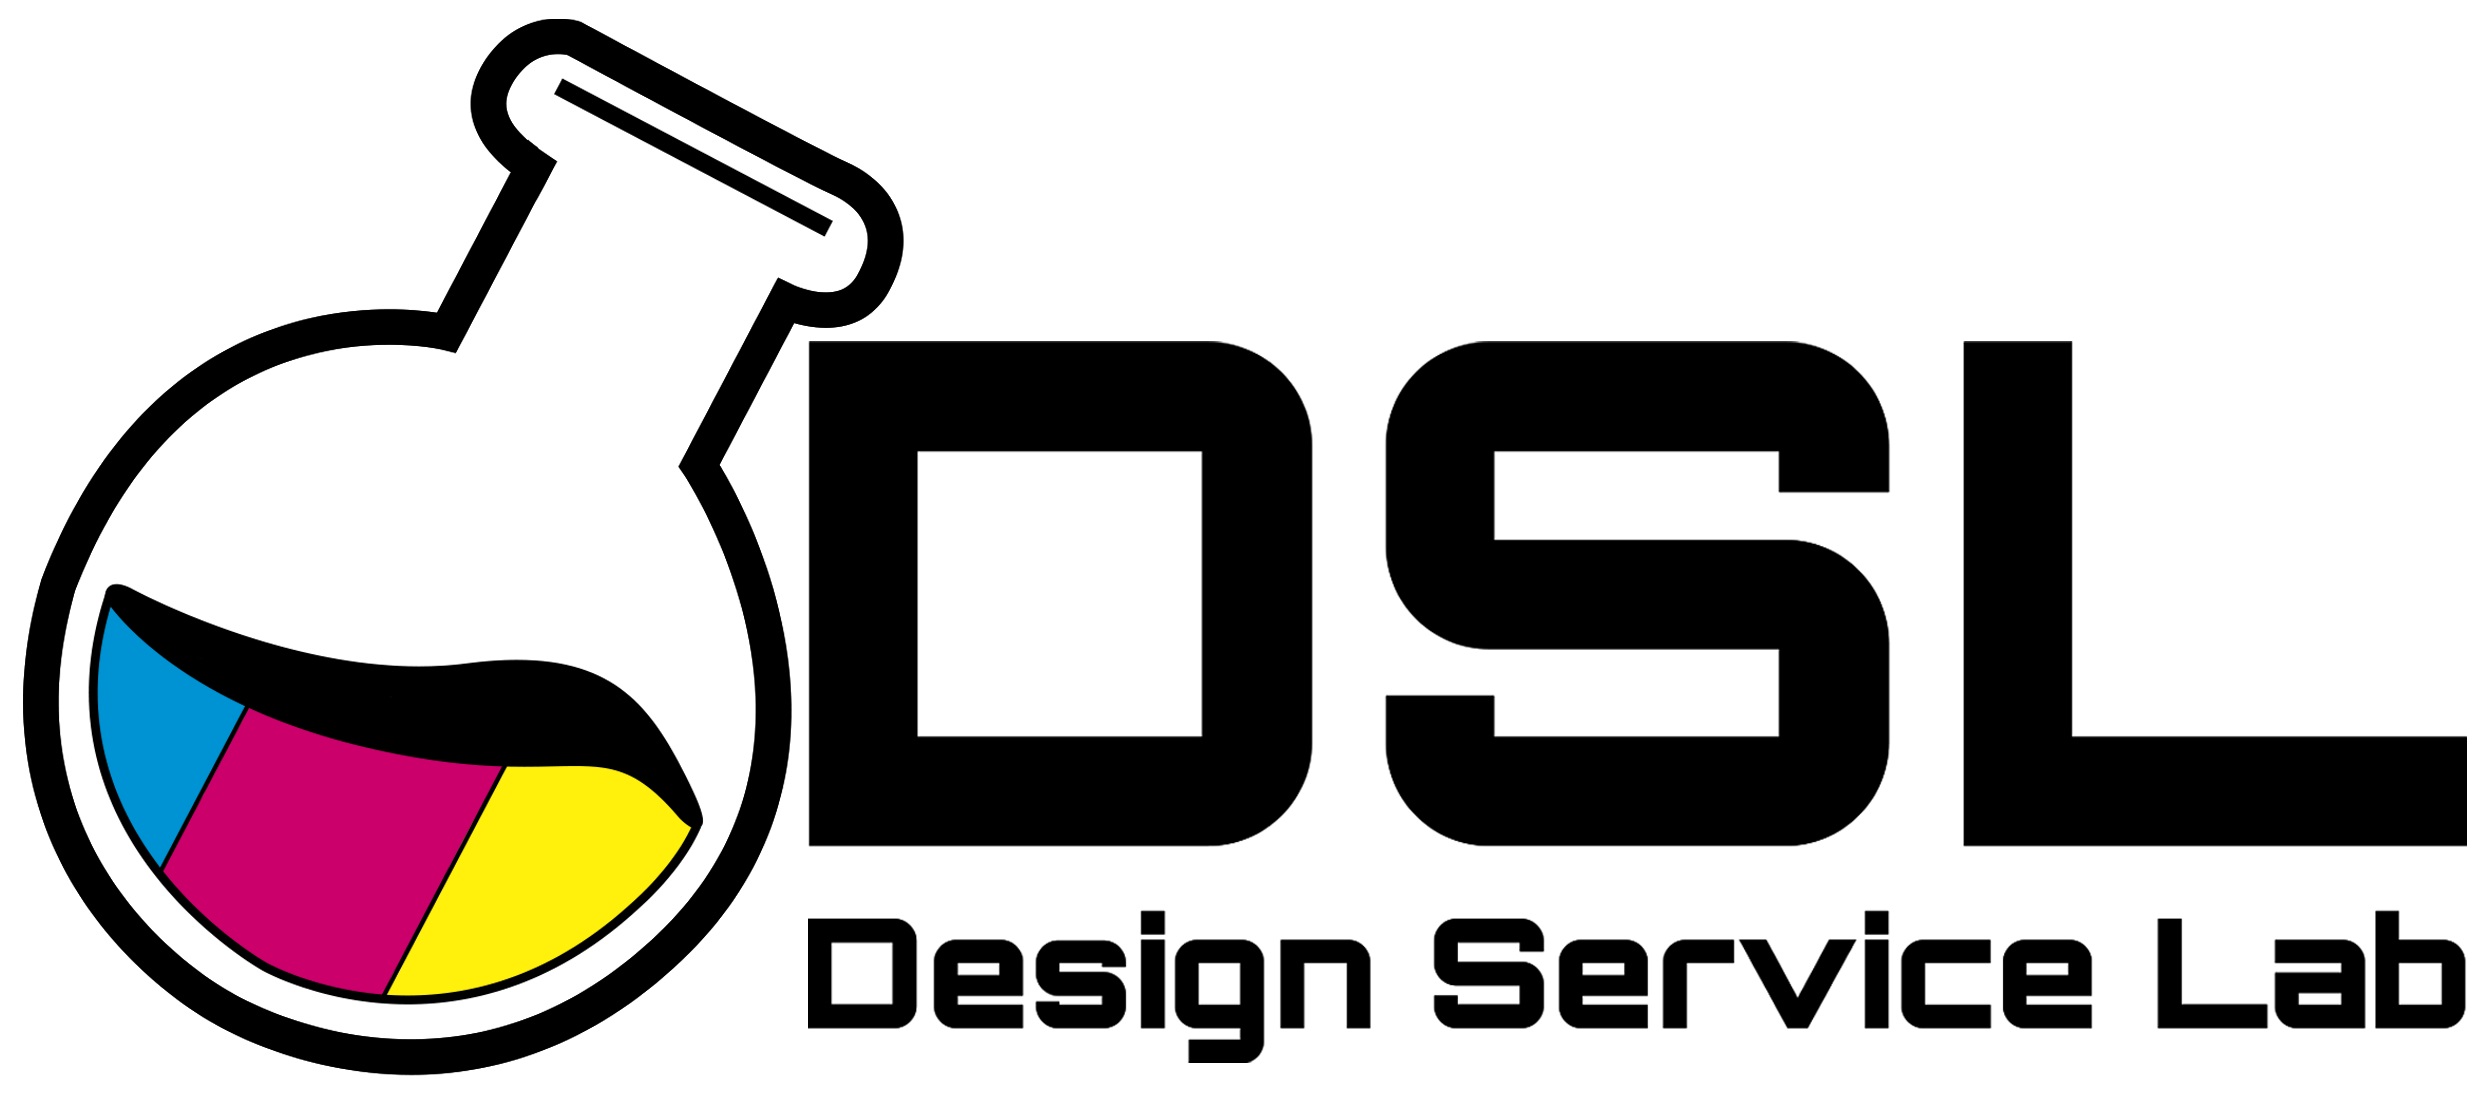 Design Service Lab